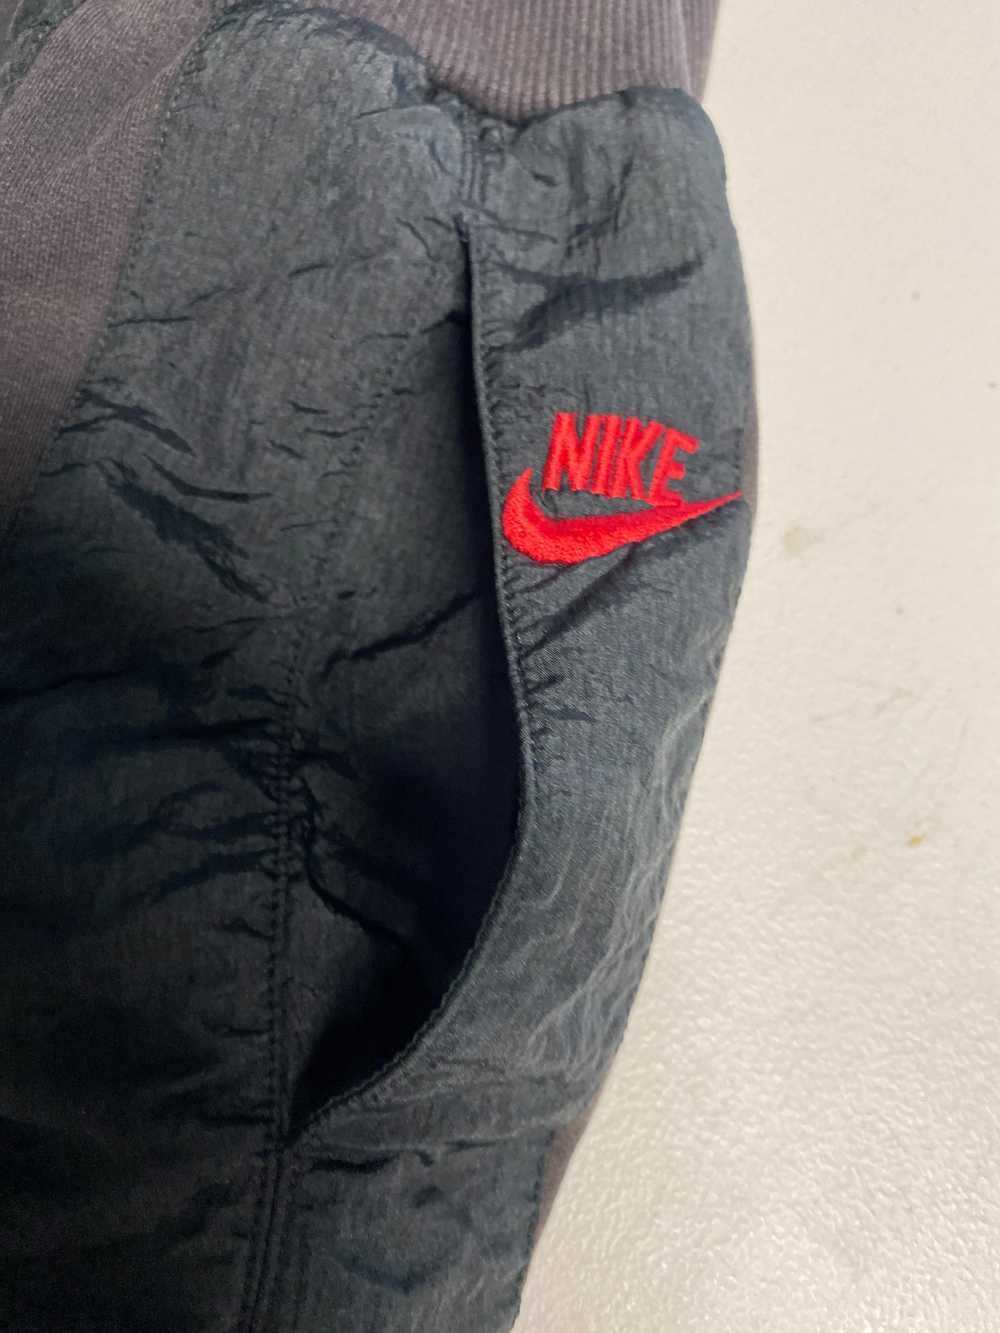 Faded Nike / Jordan sweats - image 2